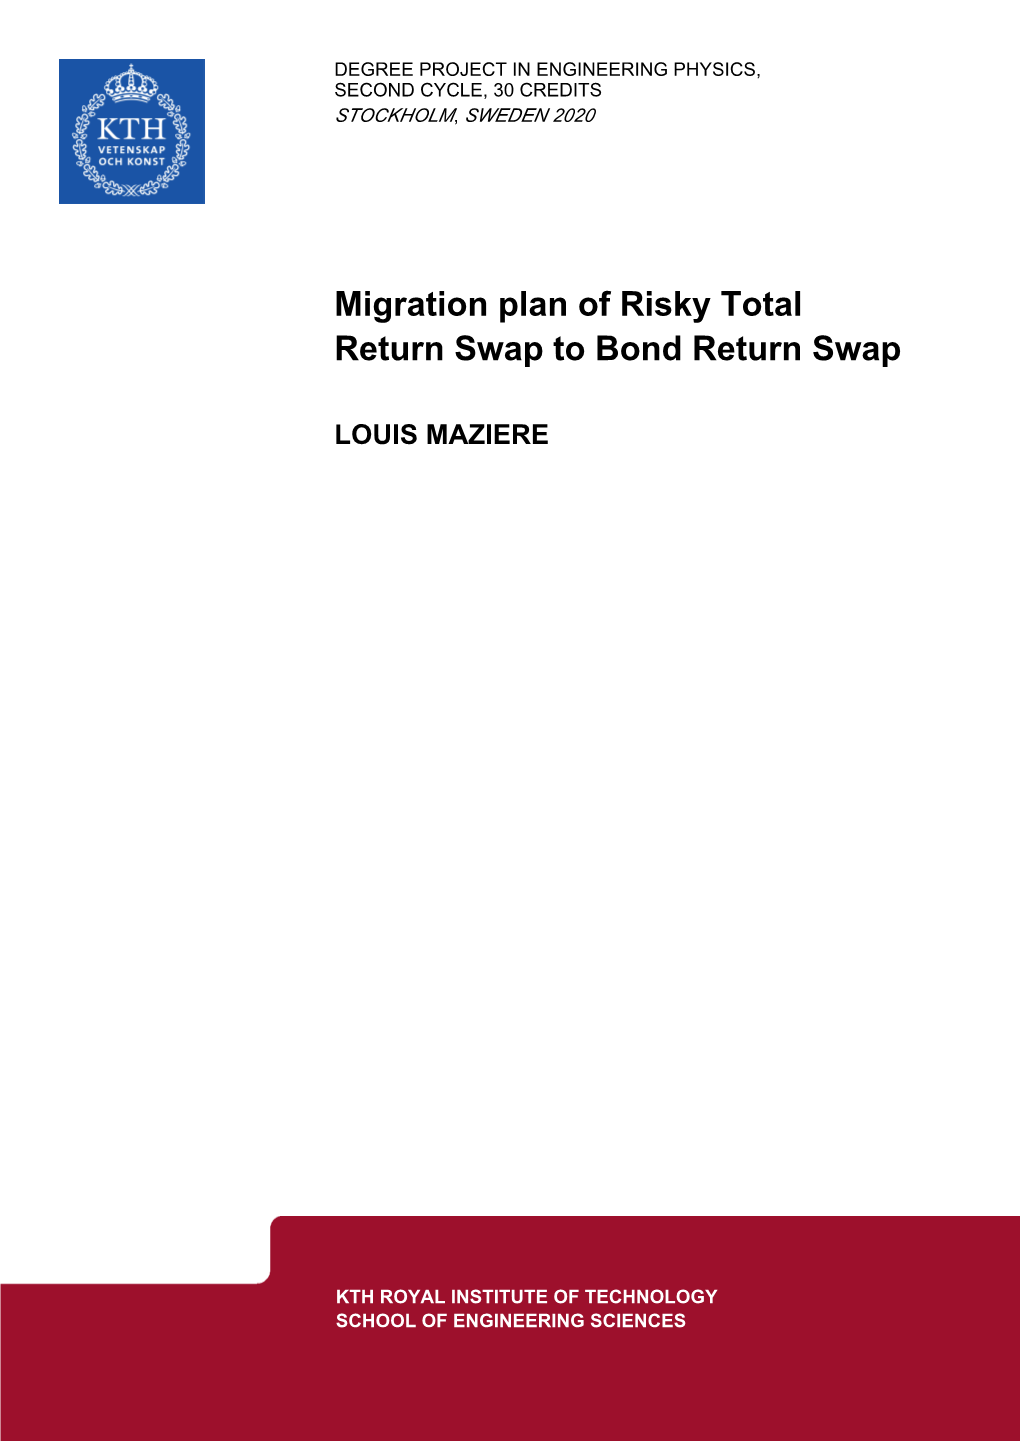 Migration Plan of Risky Total Return Swap to Bond Return Swap